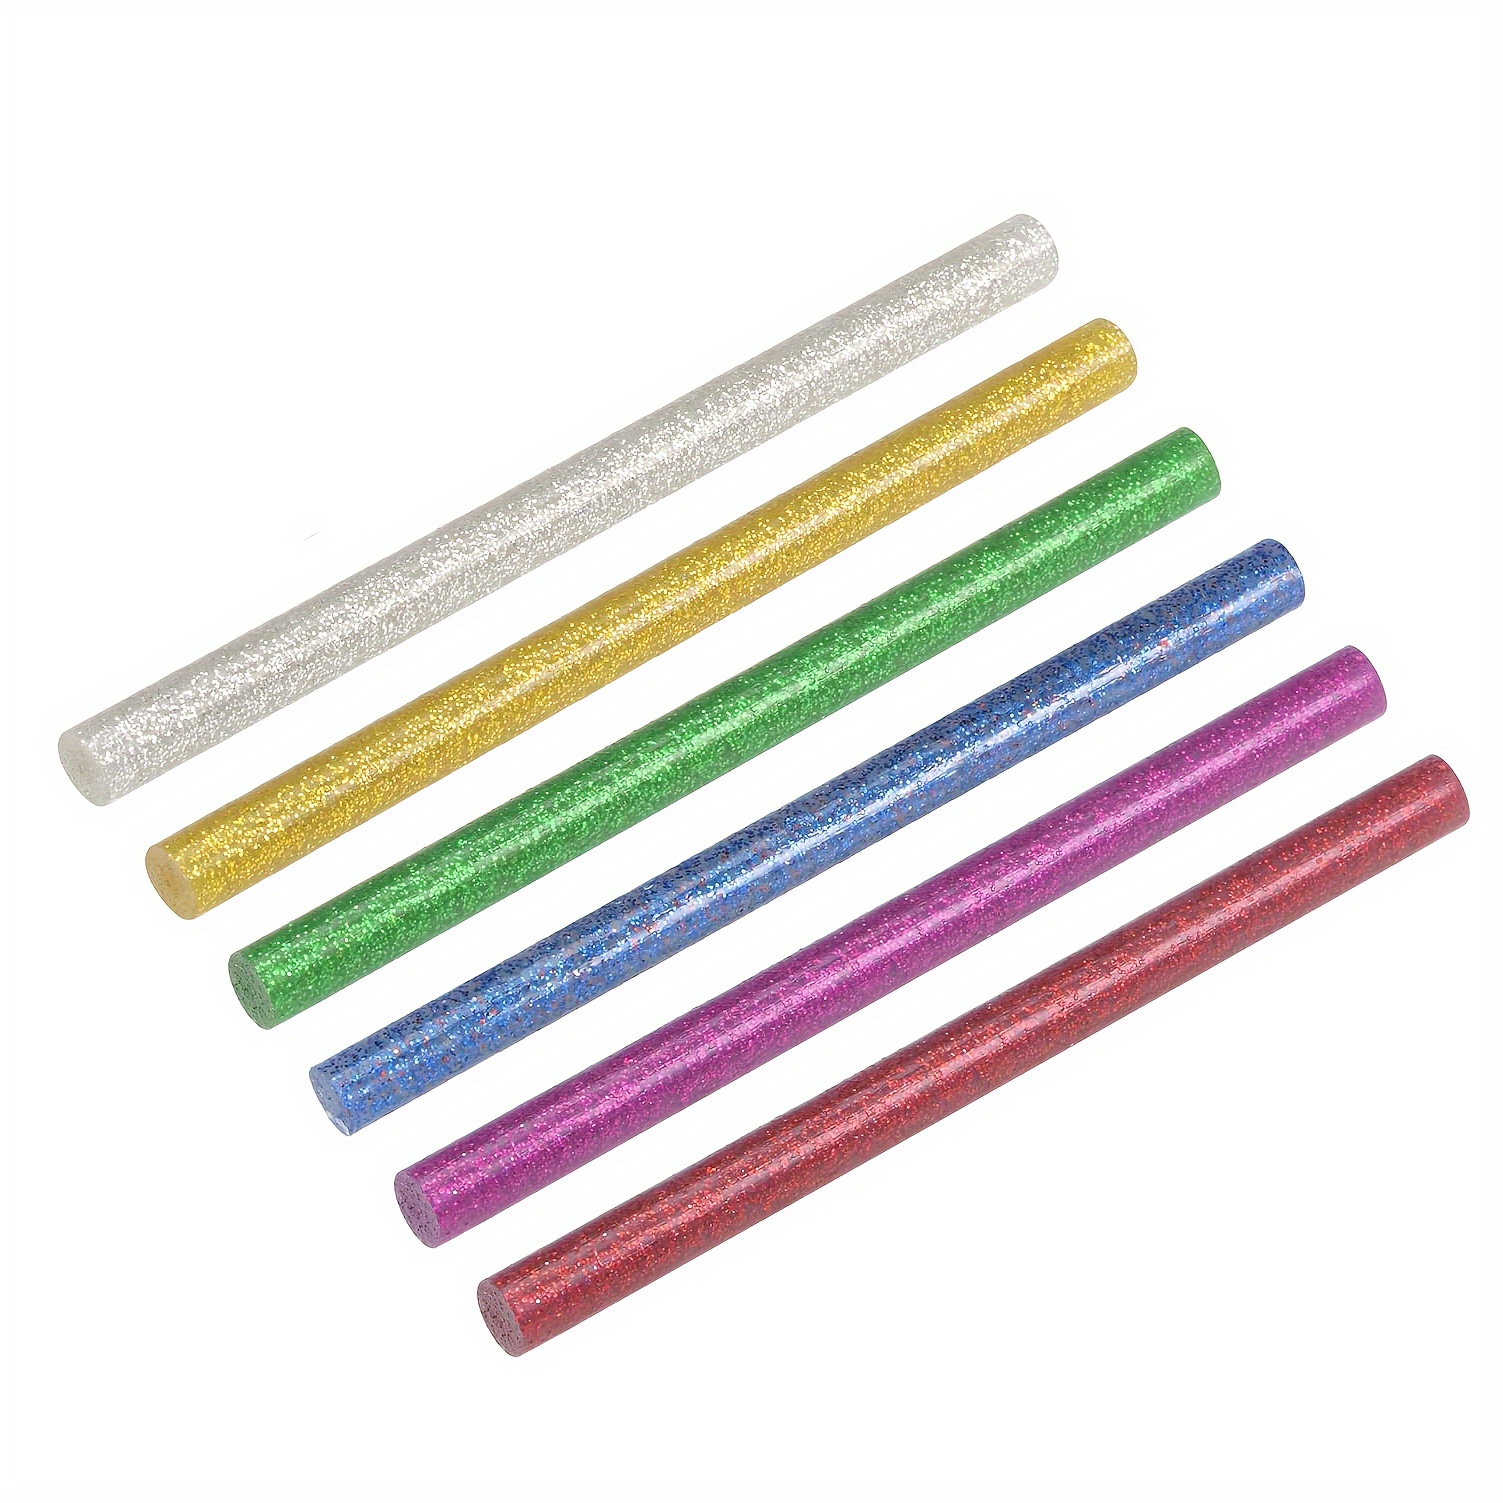 KEILEOHO 140 Pcs Colored Glitter Hot Melt Glue Sticks, 14 Colors Mini Glue Sticks, Mini Hot Glue Sticks for Arts Crafts, Home General Repair, Holiday